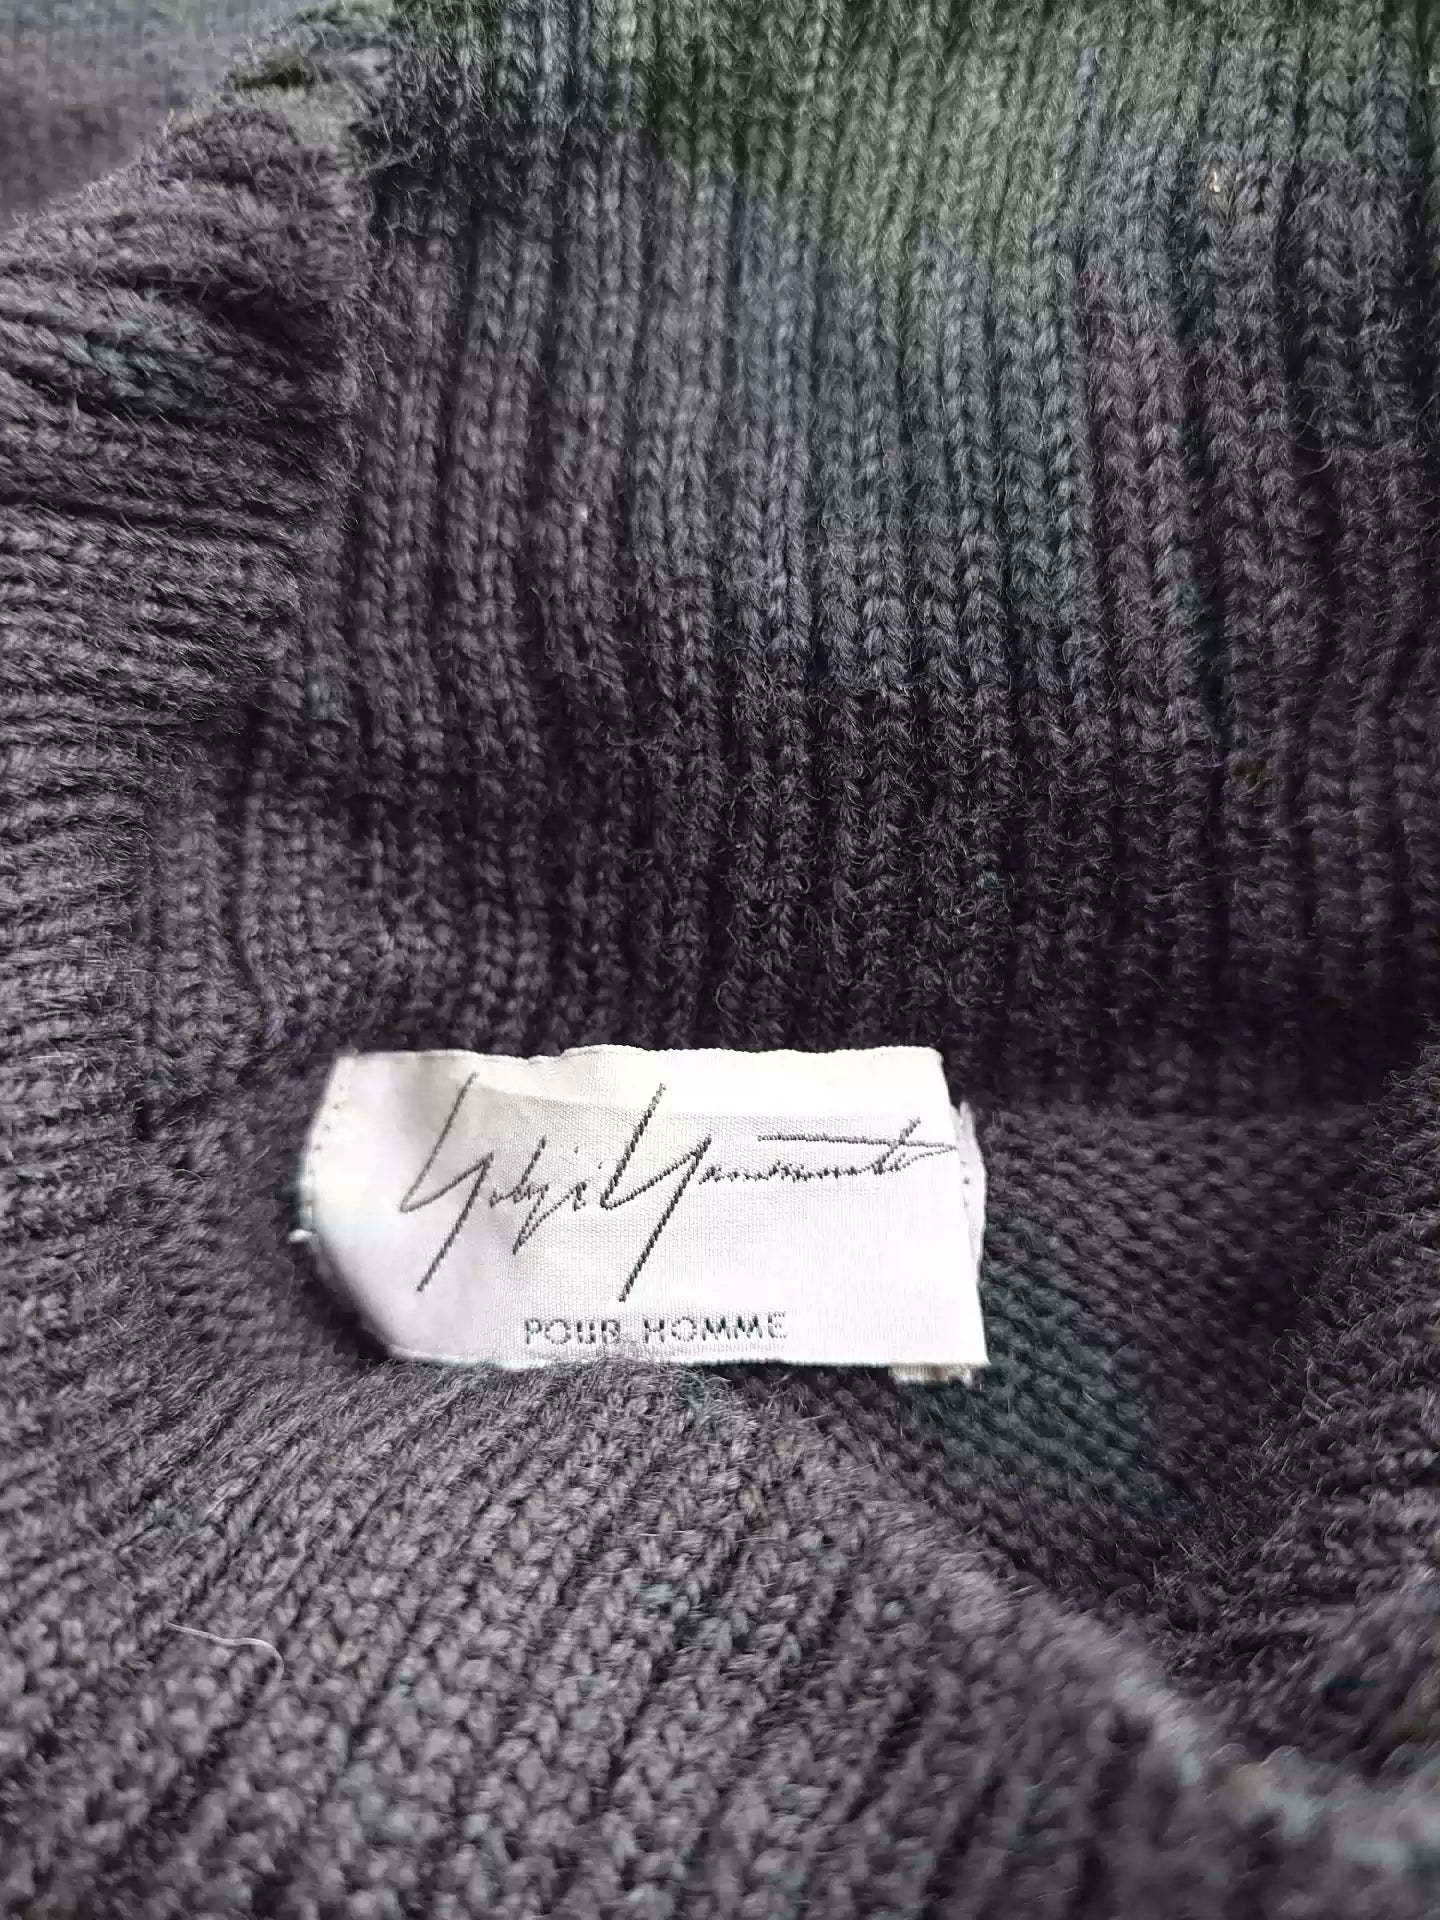 Yamamoto Yohji Main Line Pure Wool Wrinkled Sweater Cardigan